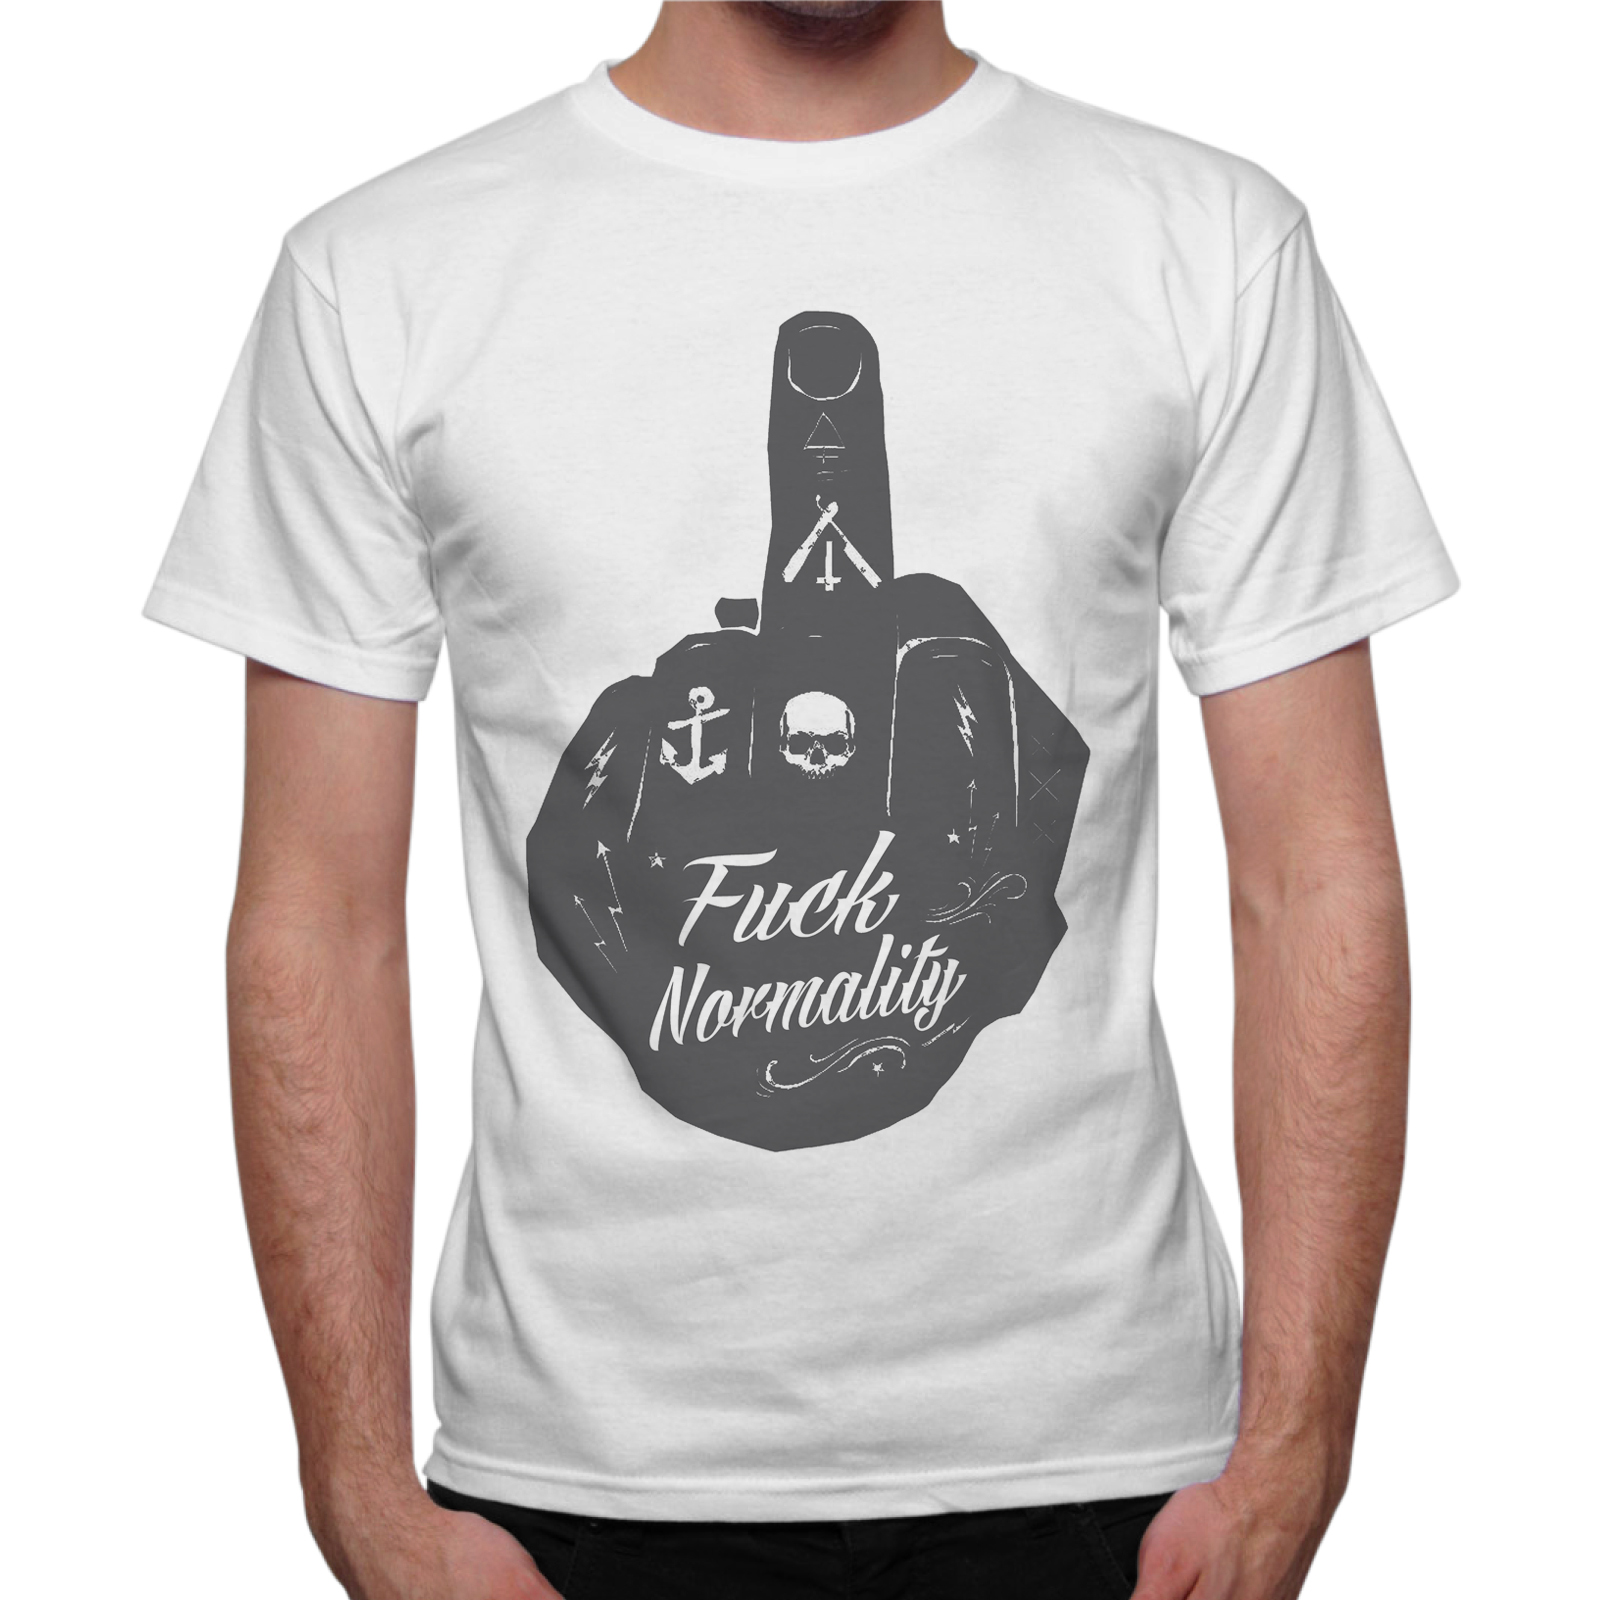 T-Shirt Uomo FU*K NORMALITY